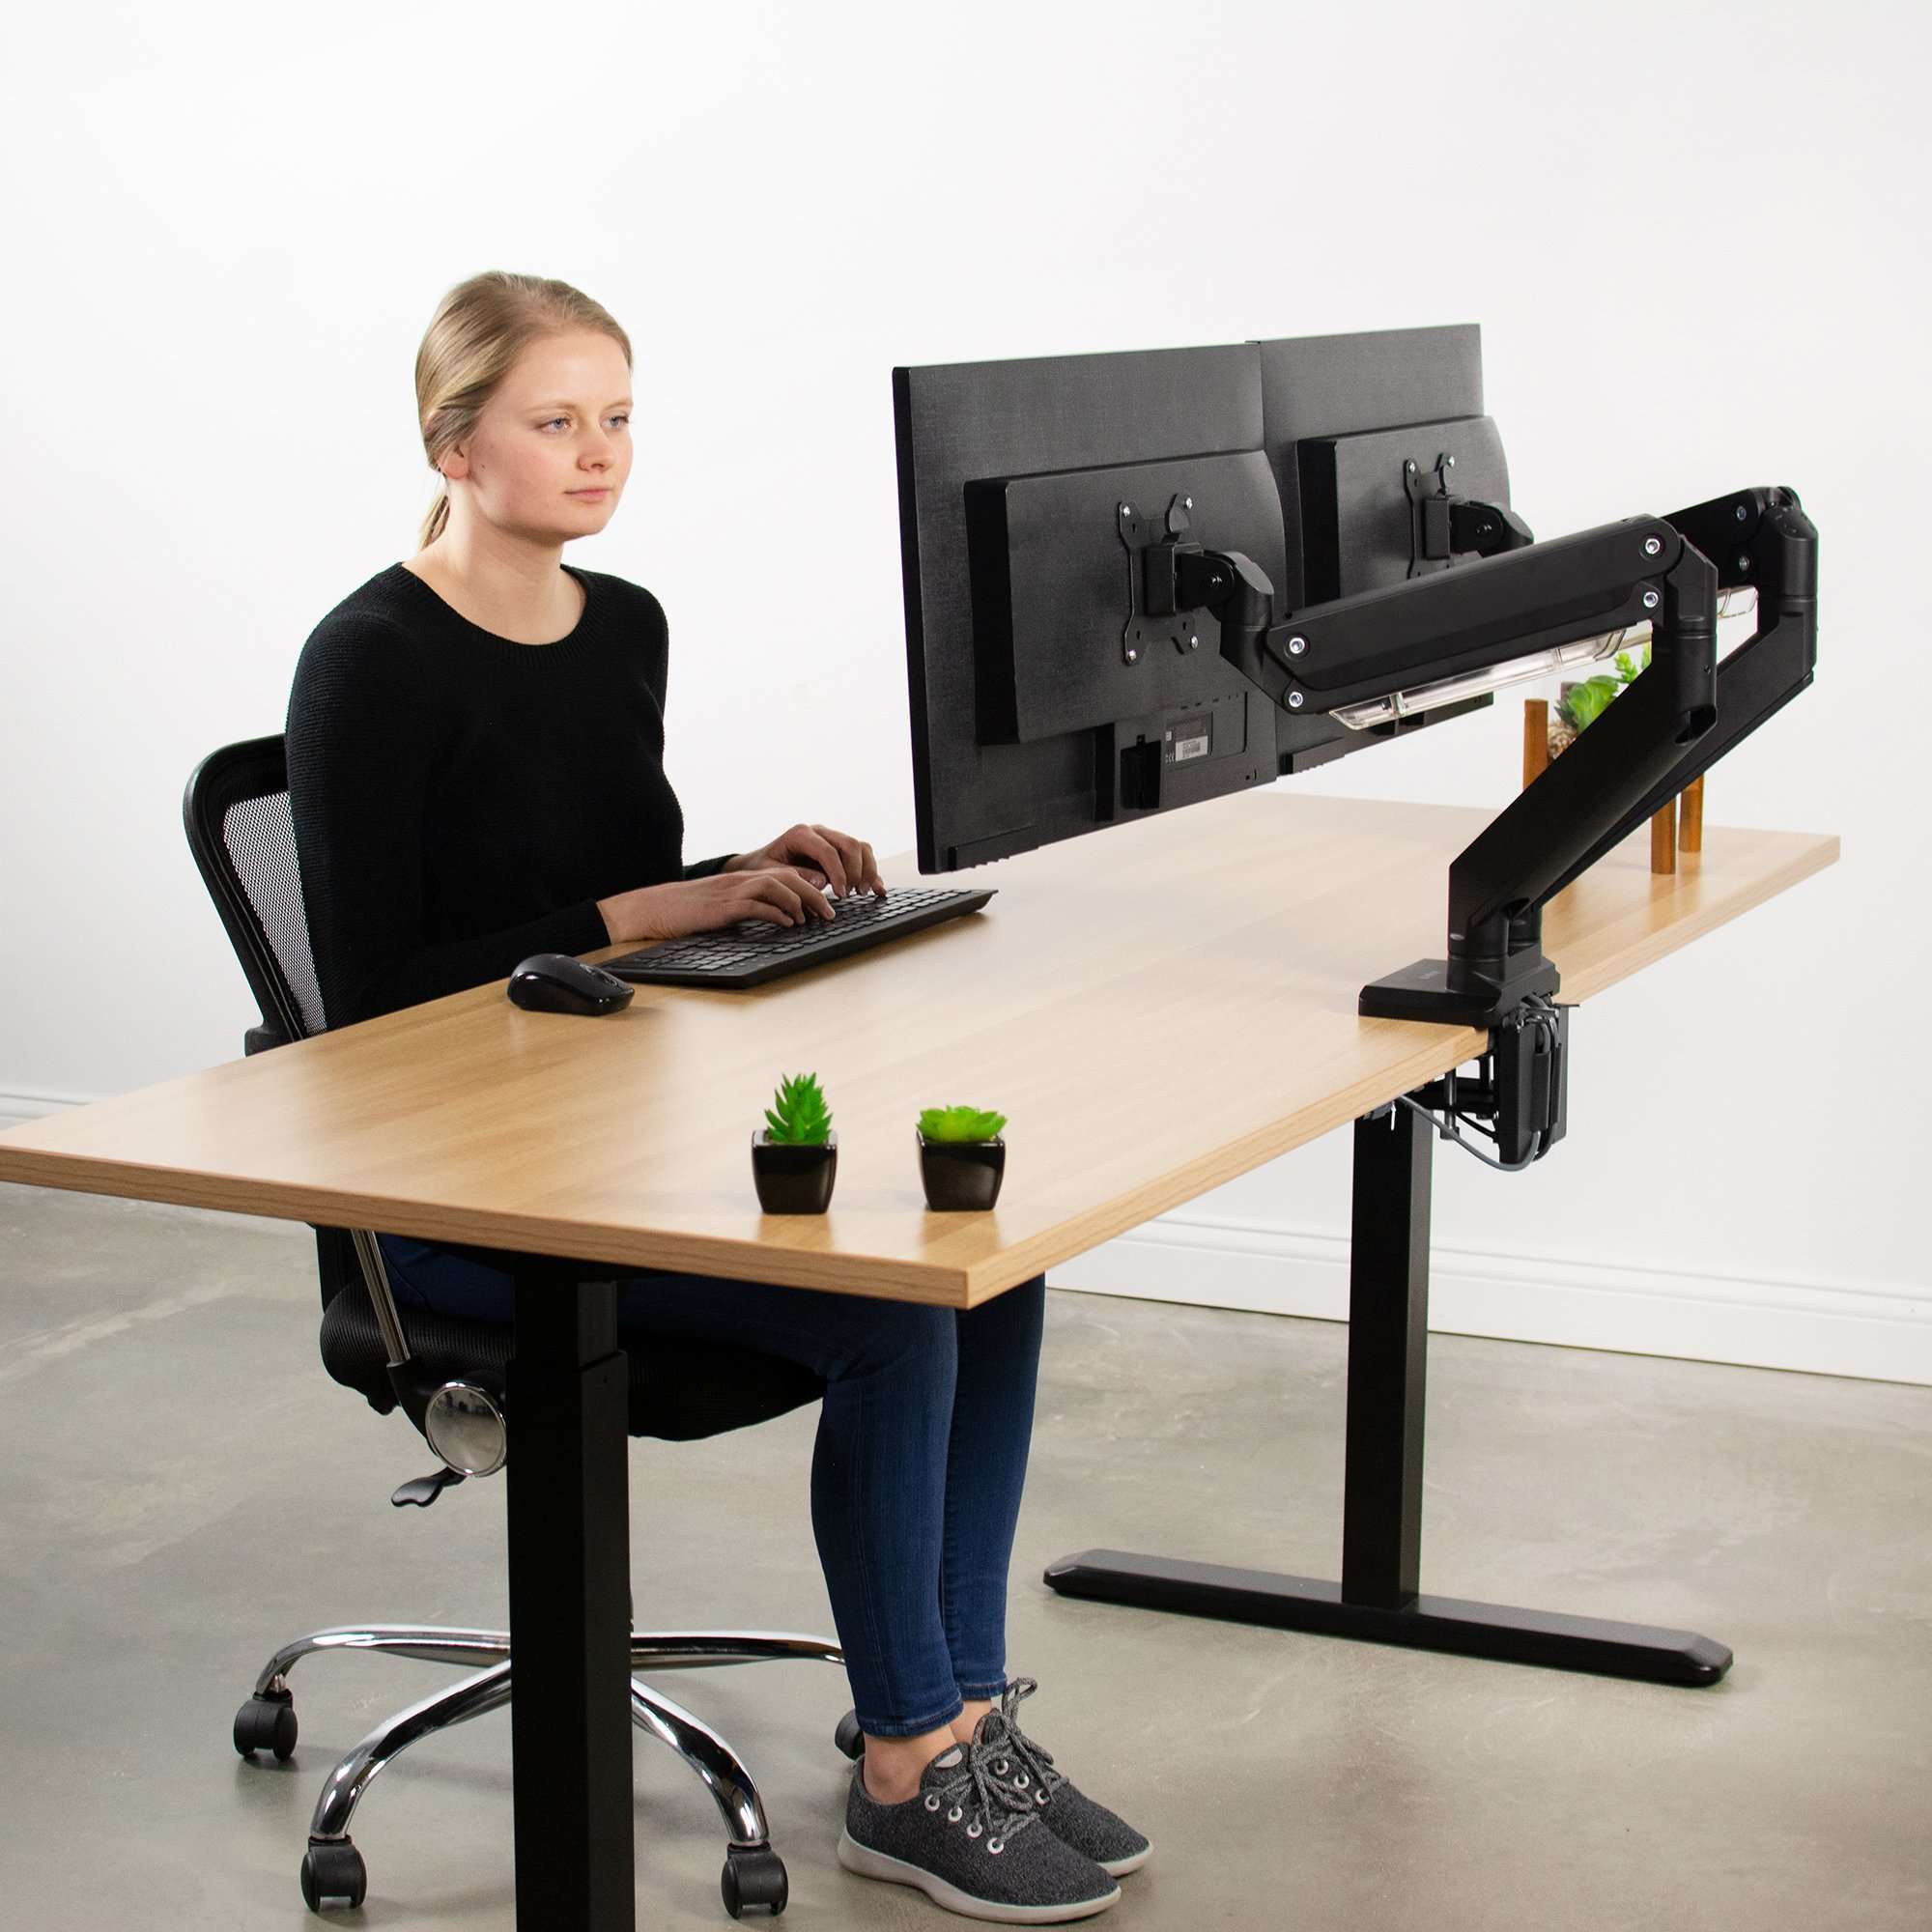 Upmost Office VIVO Black Pneumatic Arm Dual Monitor Desk Mount, STAND-V102G2